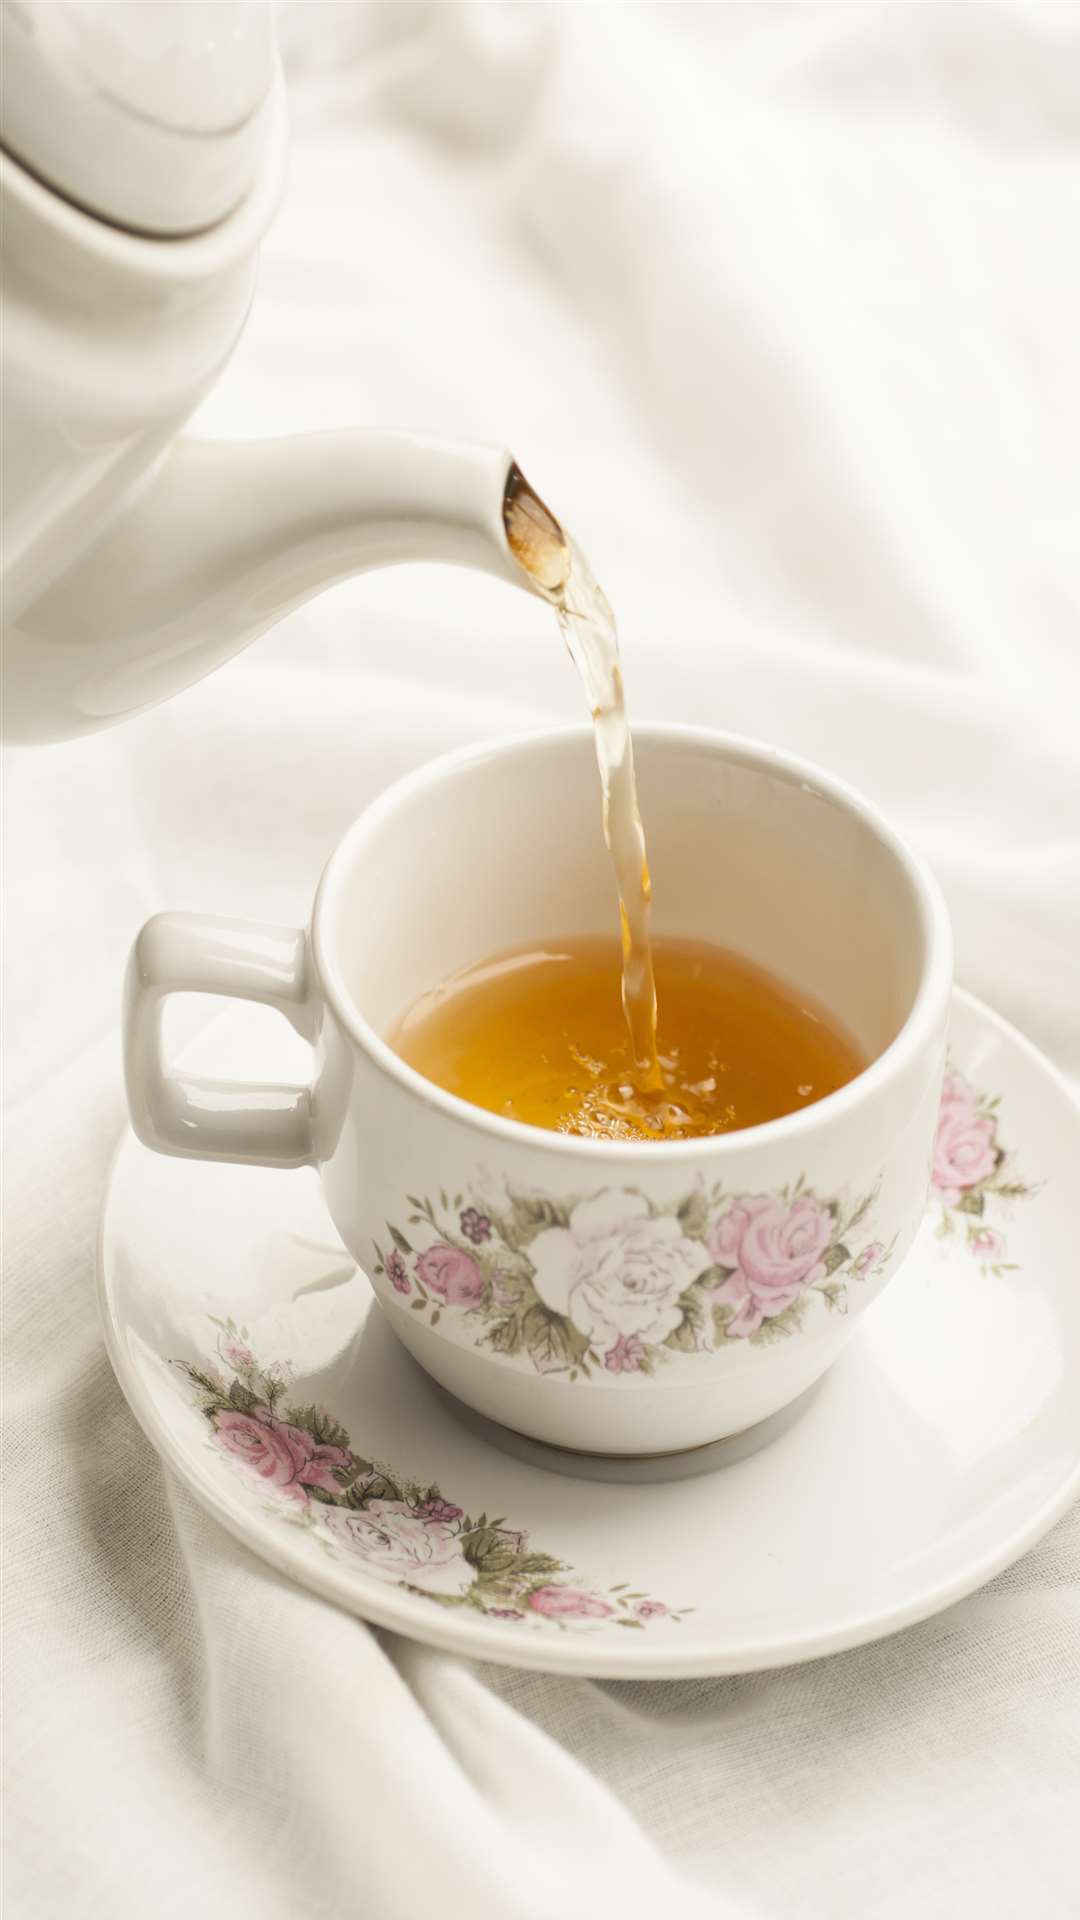 Enjoy a traditional afternoon tea